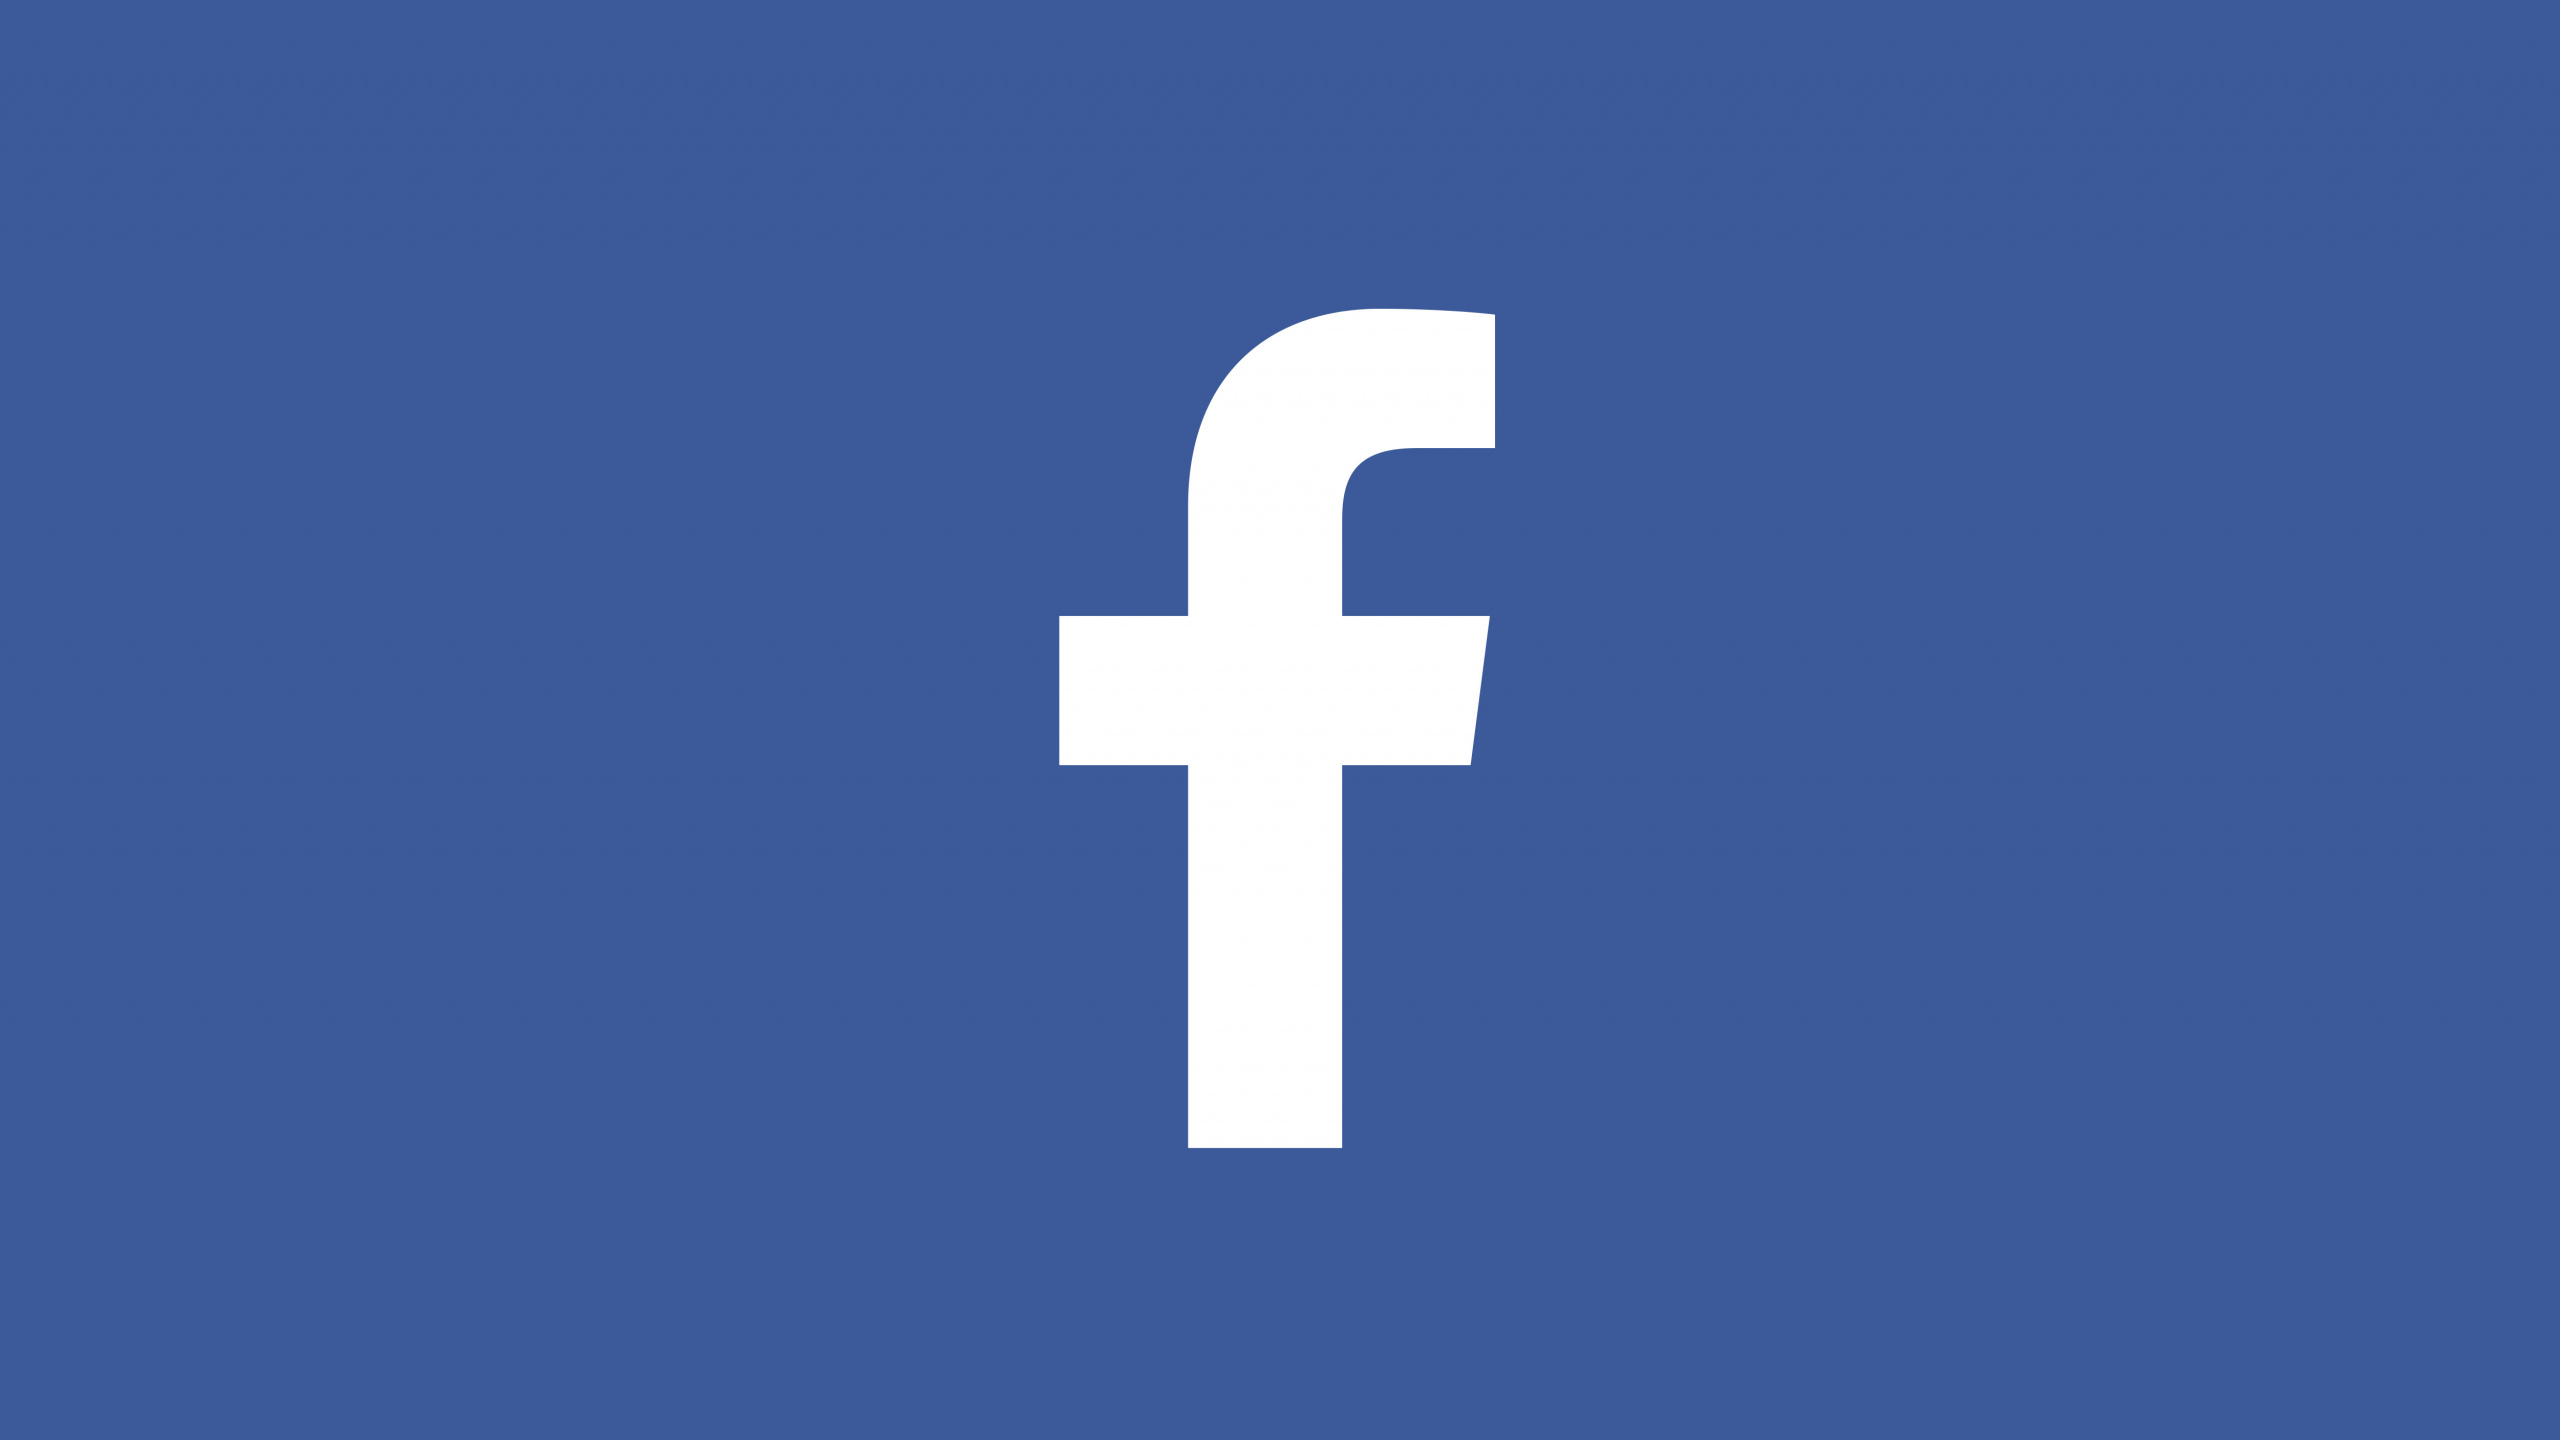 Facebook, Firmenzeichen, Text, Brand, Social-Media-Manager. Wallpaper in 2560x1440 Resolution